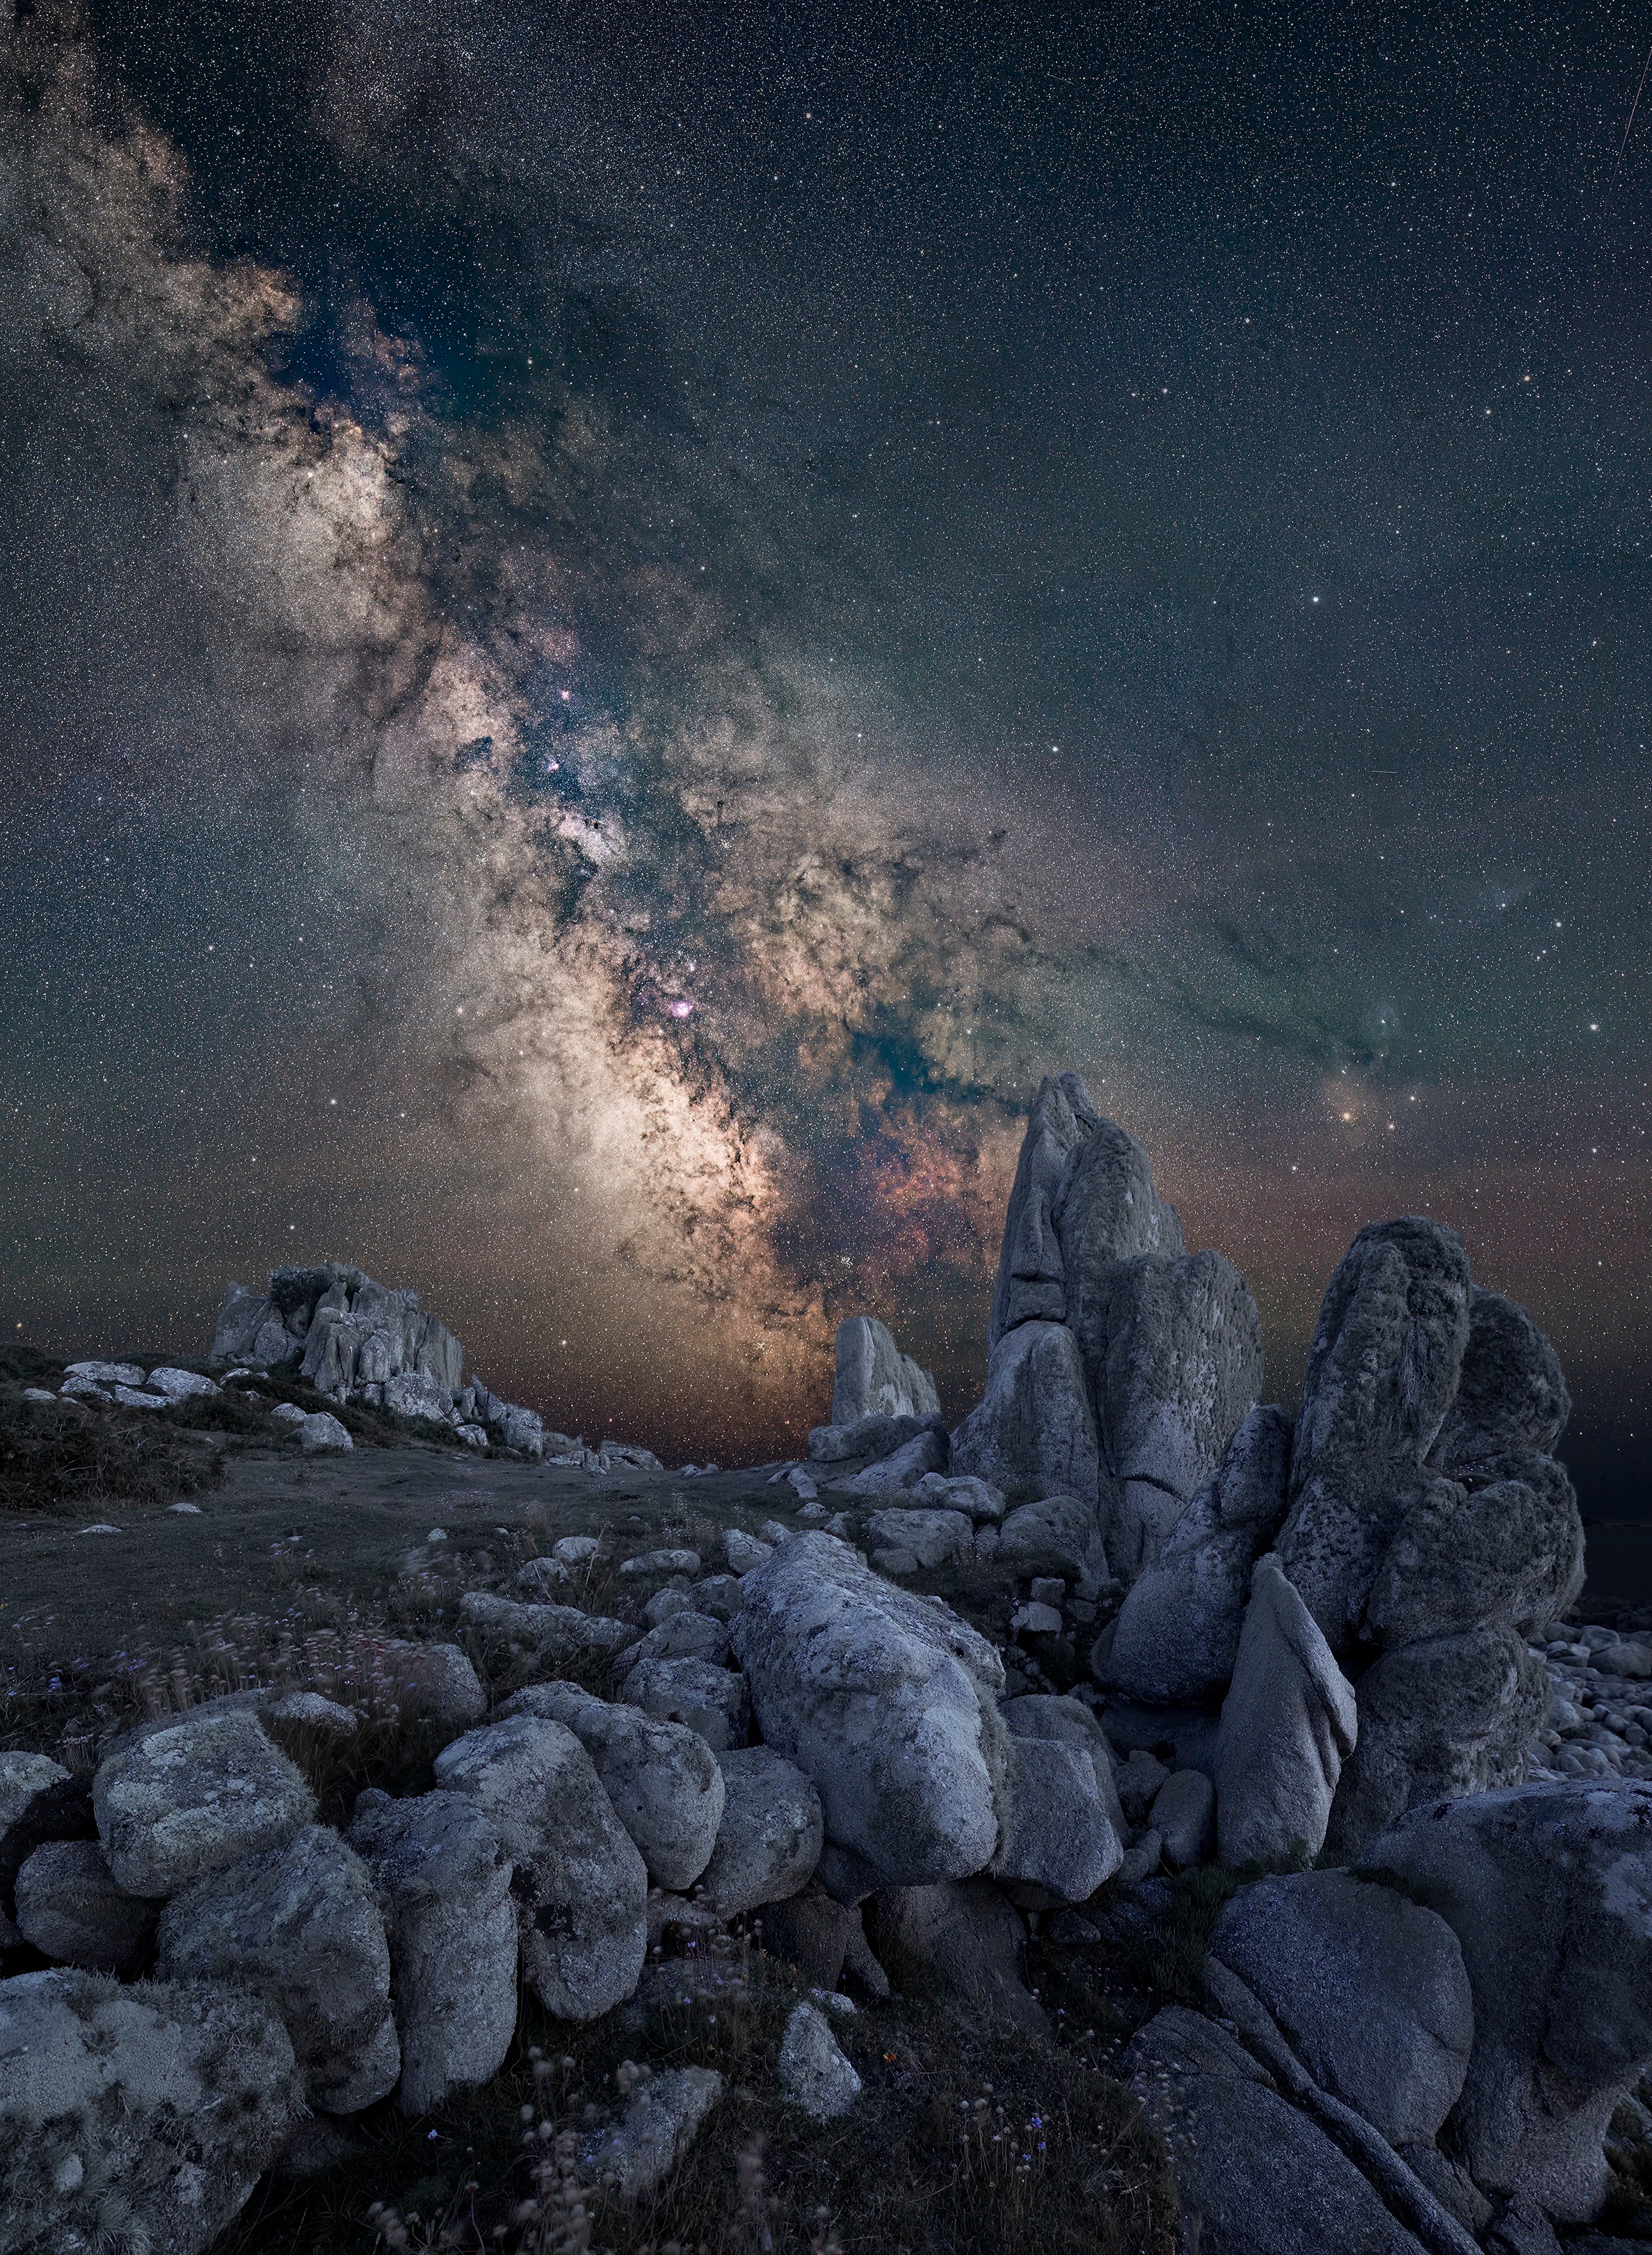 The Milky Way over the isle of St. Agnes. (Photo: Derek Horlock)